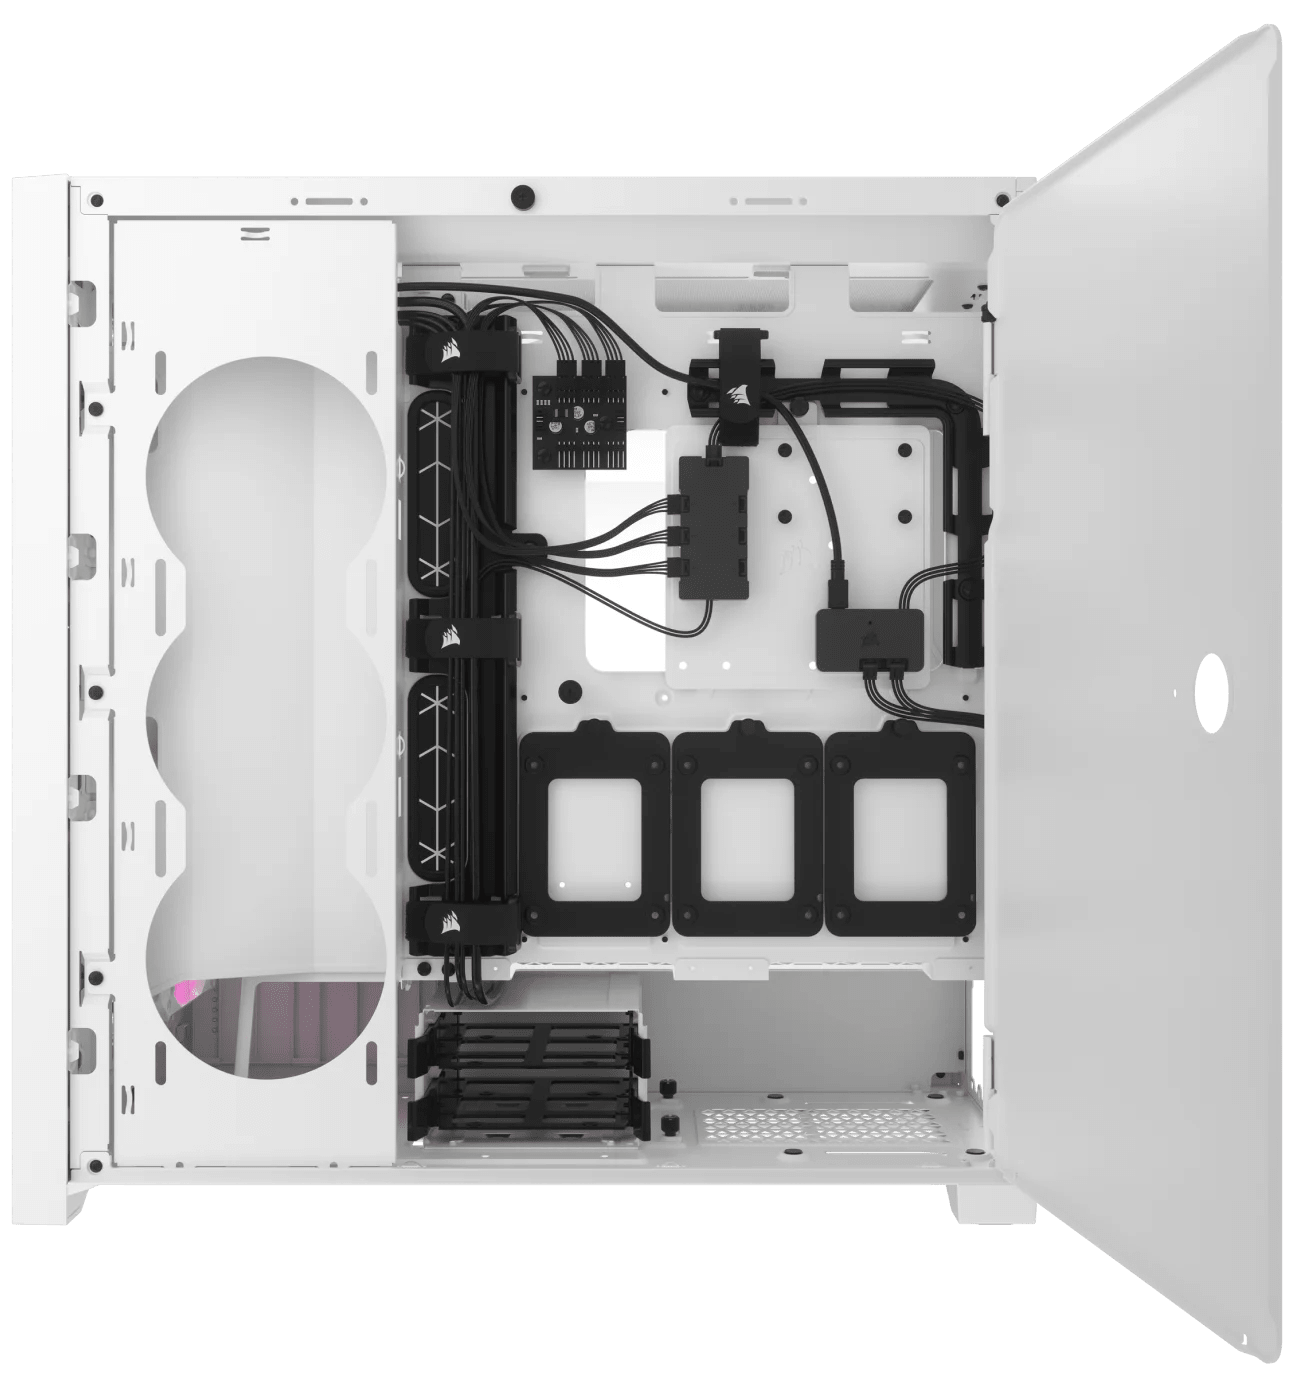 Icue 5000d Rgb Airflow Mid Tower Case True White 3x Af120 Rgb Elite